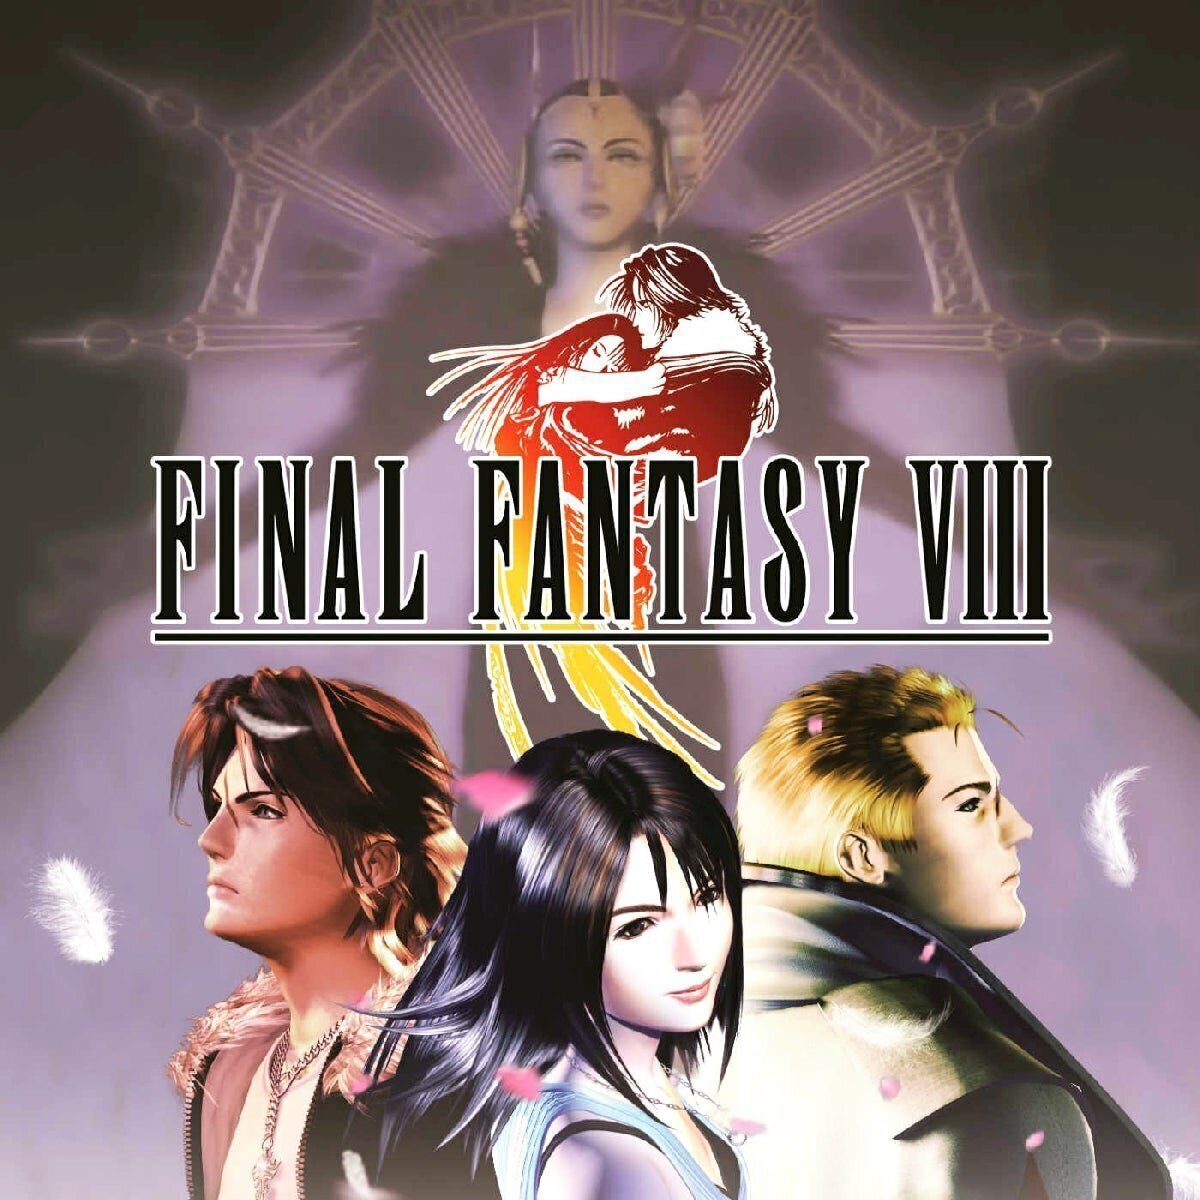 Di algo bonito de Final Fantasy VIII